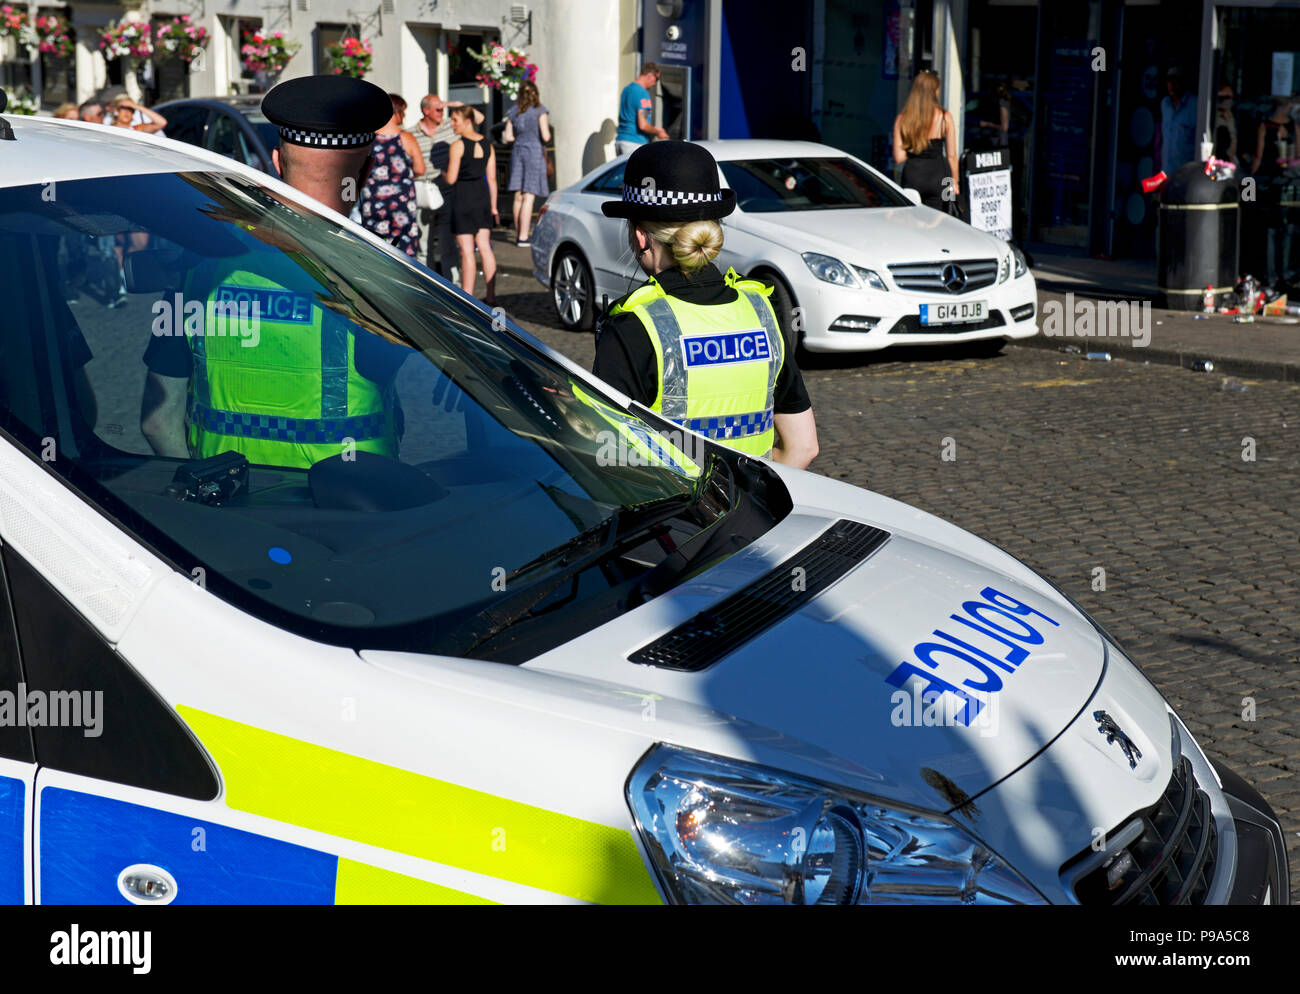 Police and police van, Ulverston, Cumbria, England UK Stock Photo